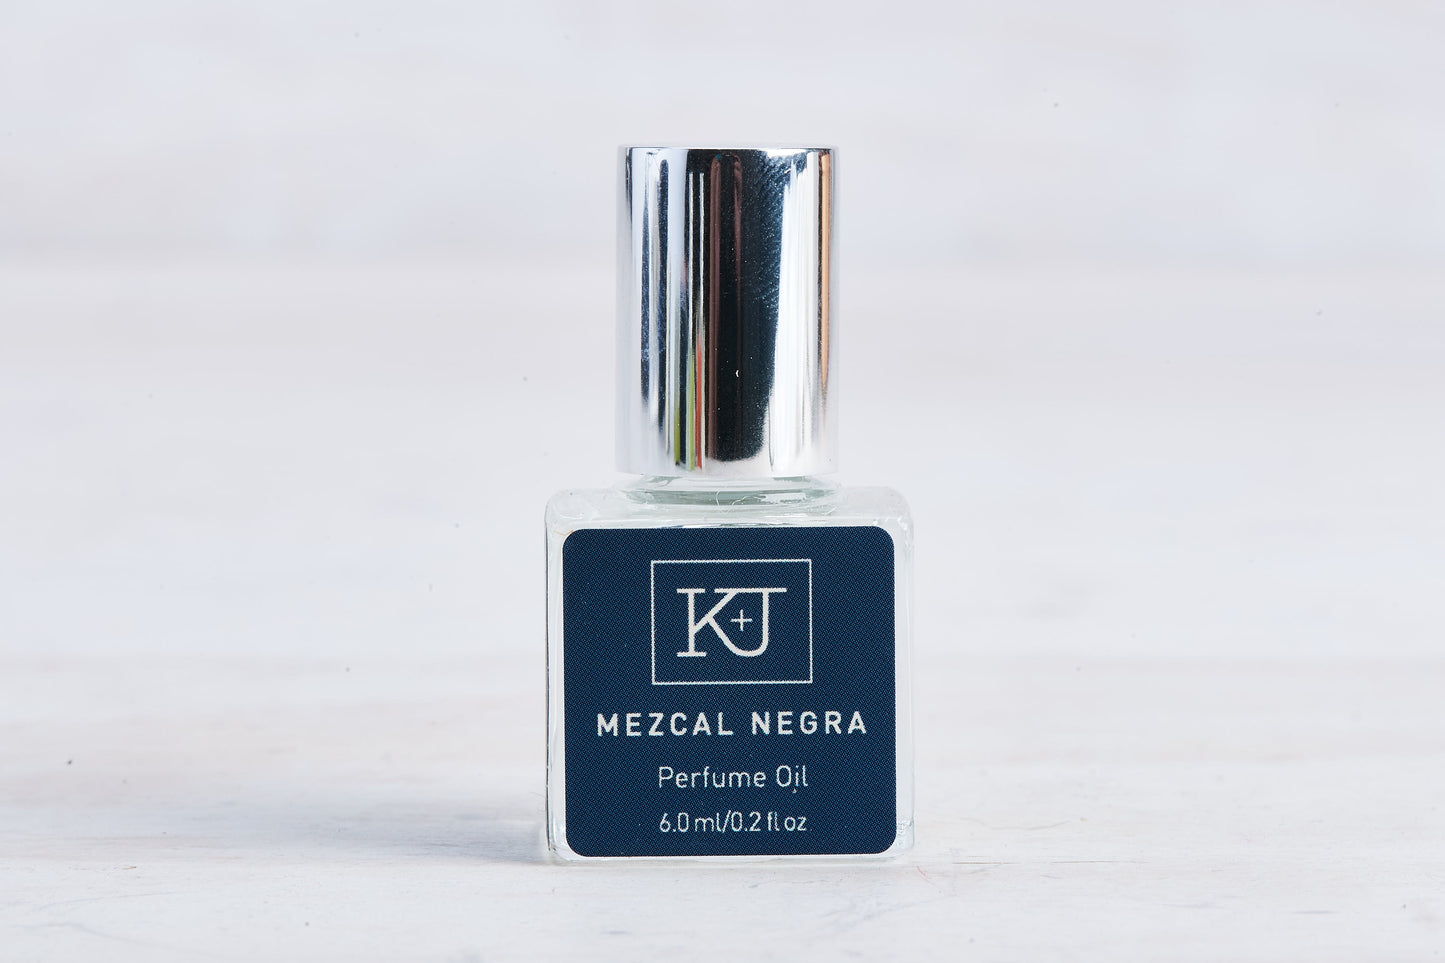 Mezcal Negra Perfume oil